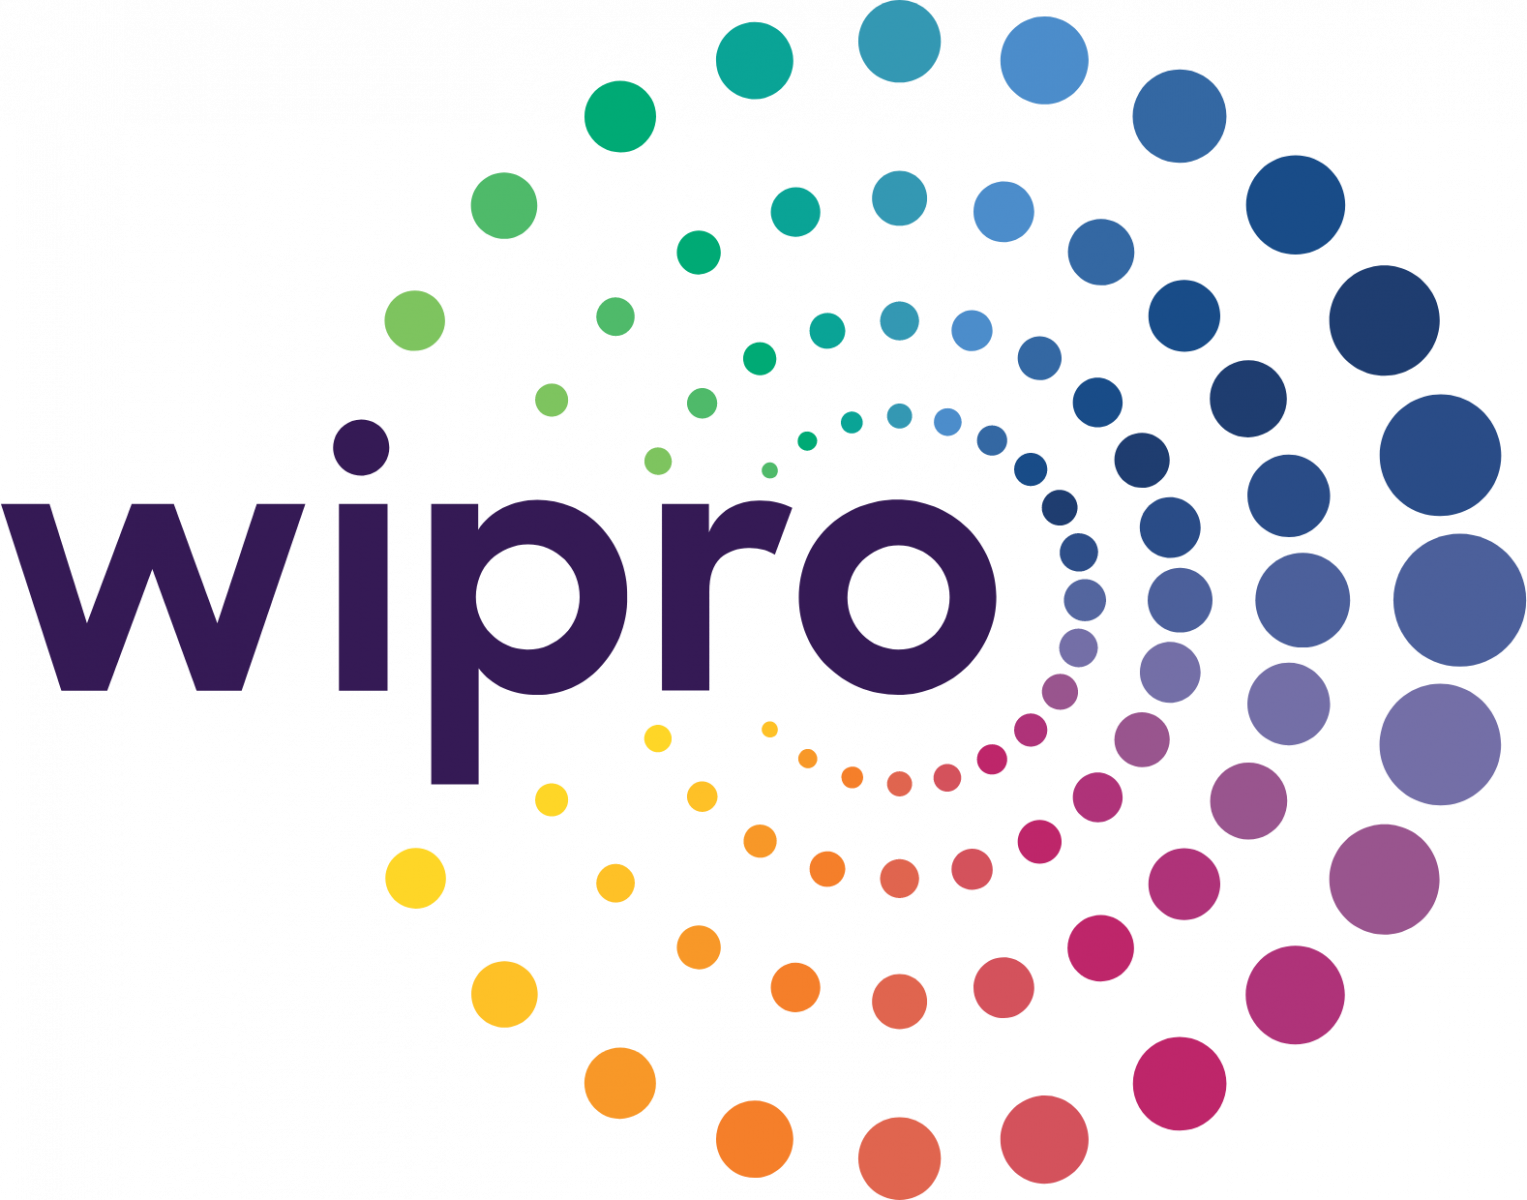 Wipro IT companies in Andhra Pradesh